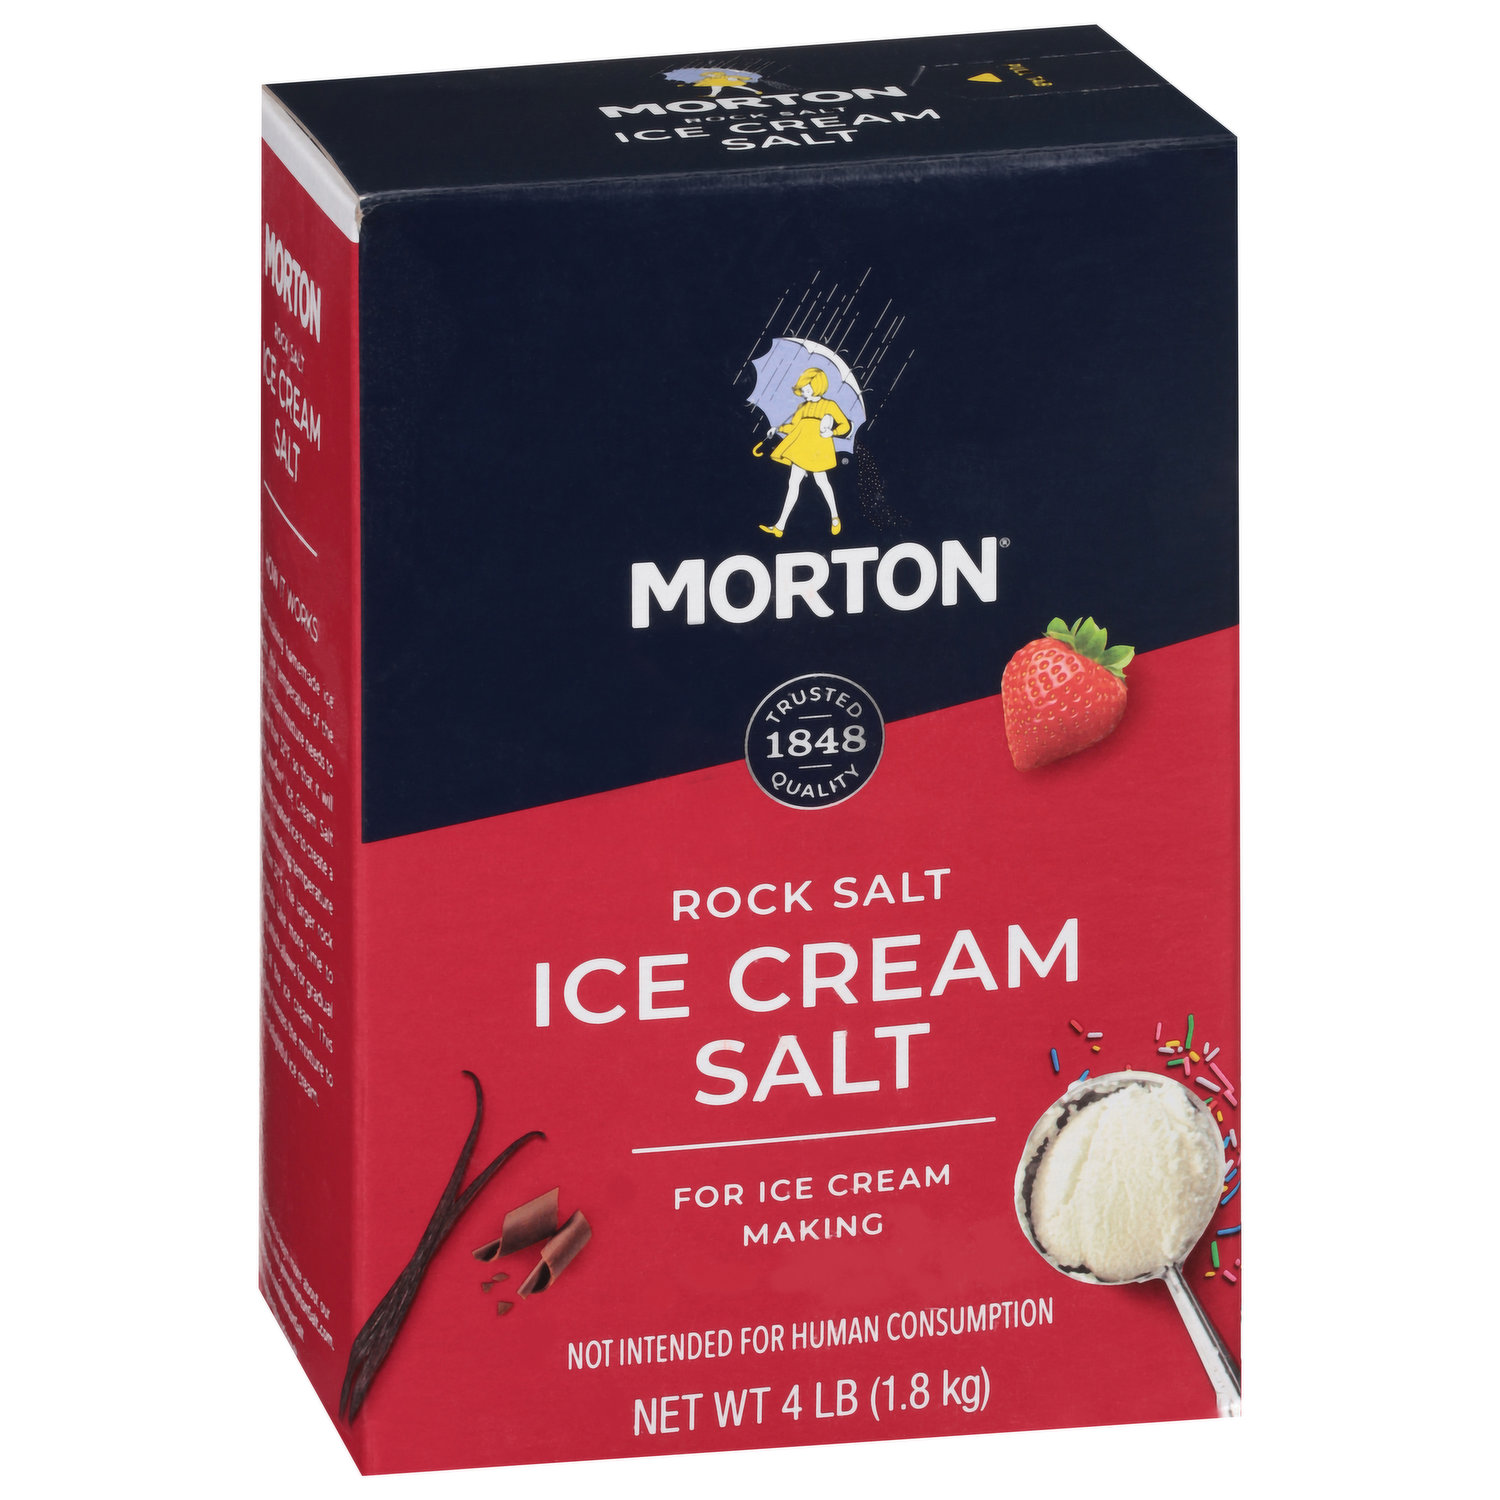 Smells Like Food in Here: Morton Ice Cream Salt